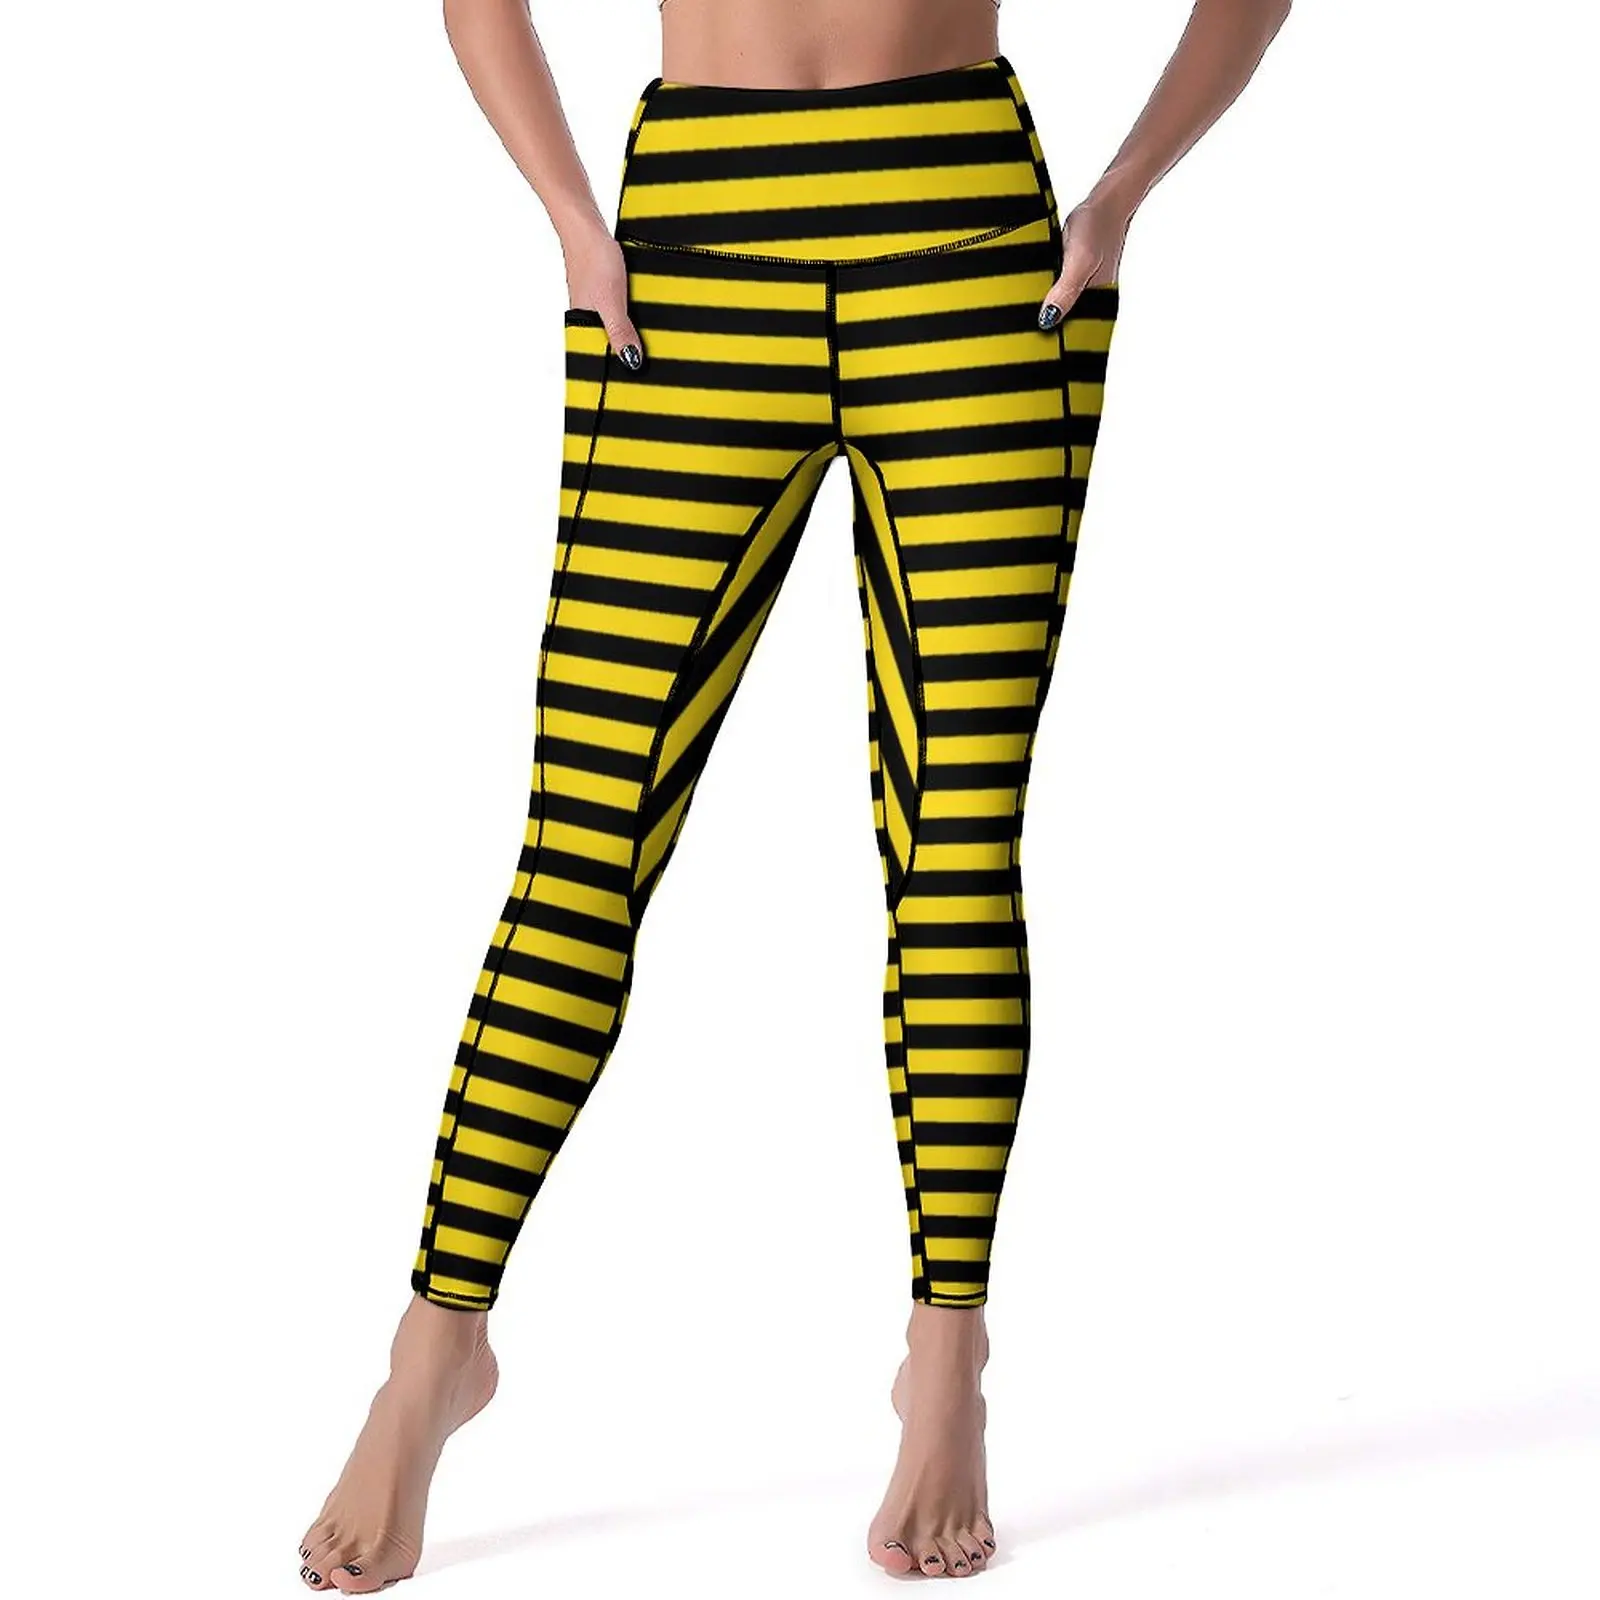 

Bumble Bees Yoga Pants Sexy Yellow Black Stripes Graphic Leggings High Waist Workout Gym Leggins Kawaii Stretchy Sports Tights